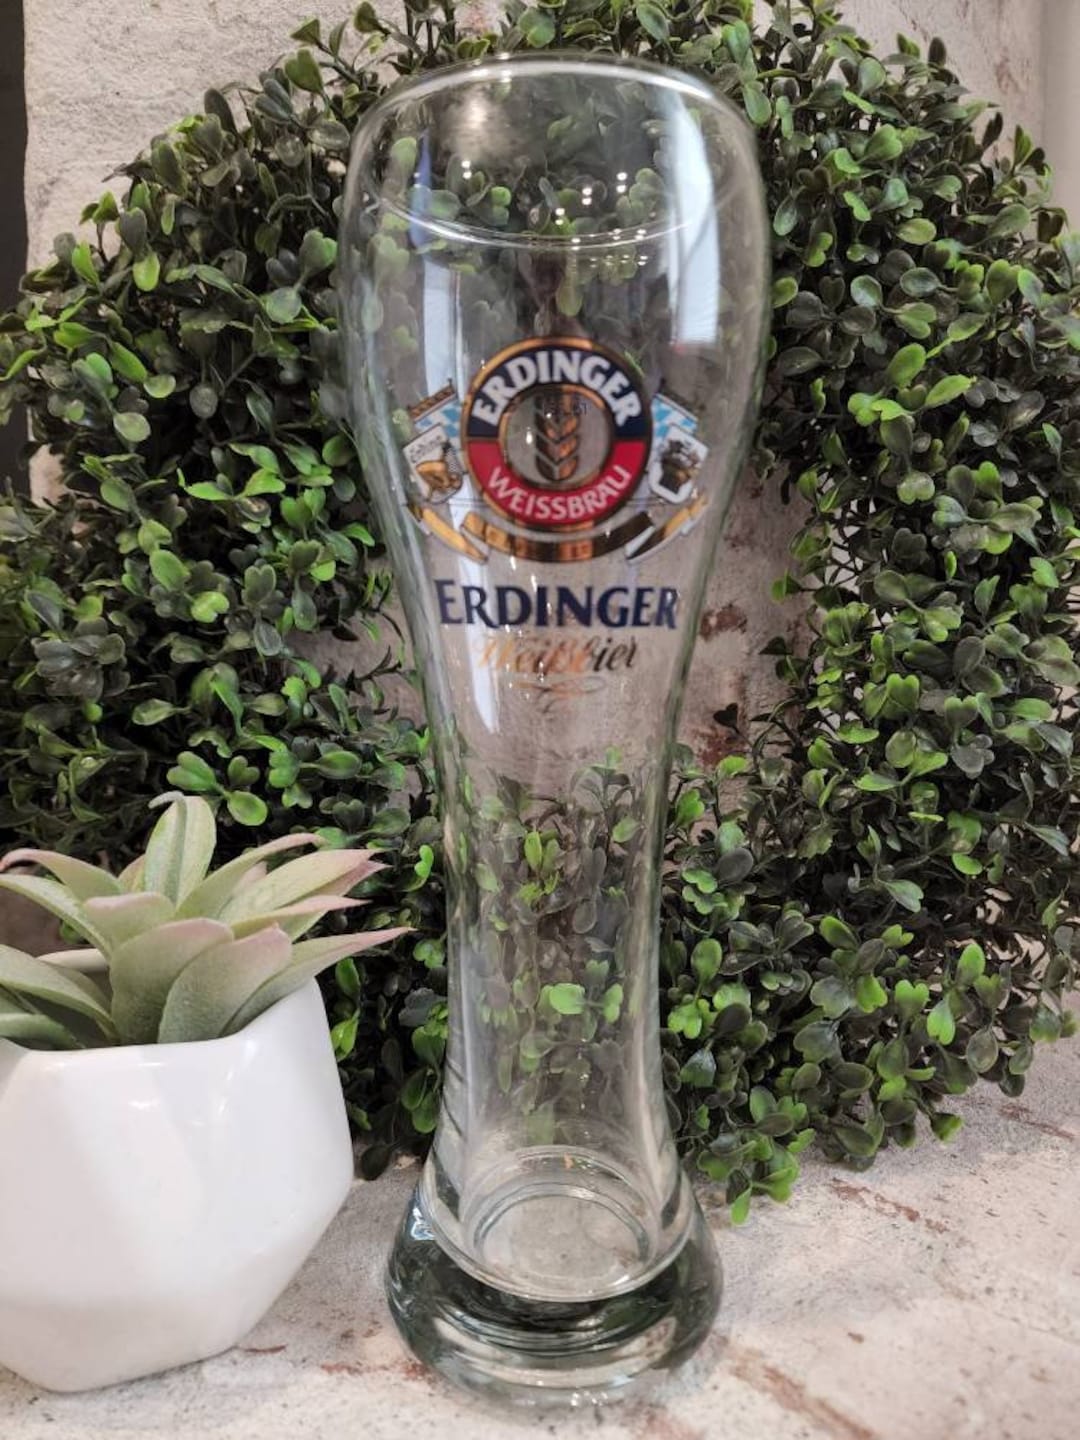 klinker Vochtigheid Huidige Fathers day gift Vintage ERDINGER Weissbier 0.5 Liter Beer - Etsy Nederland